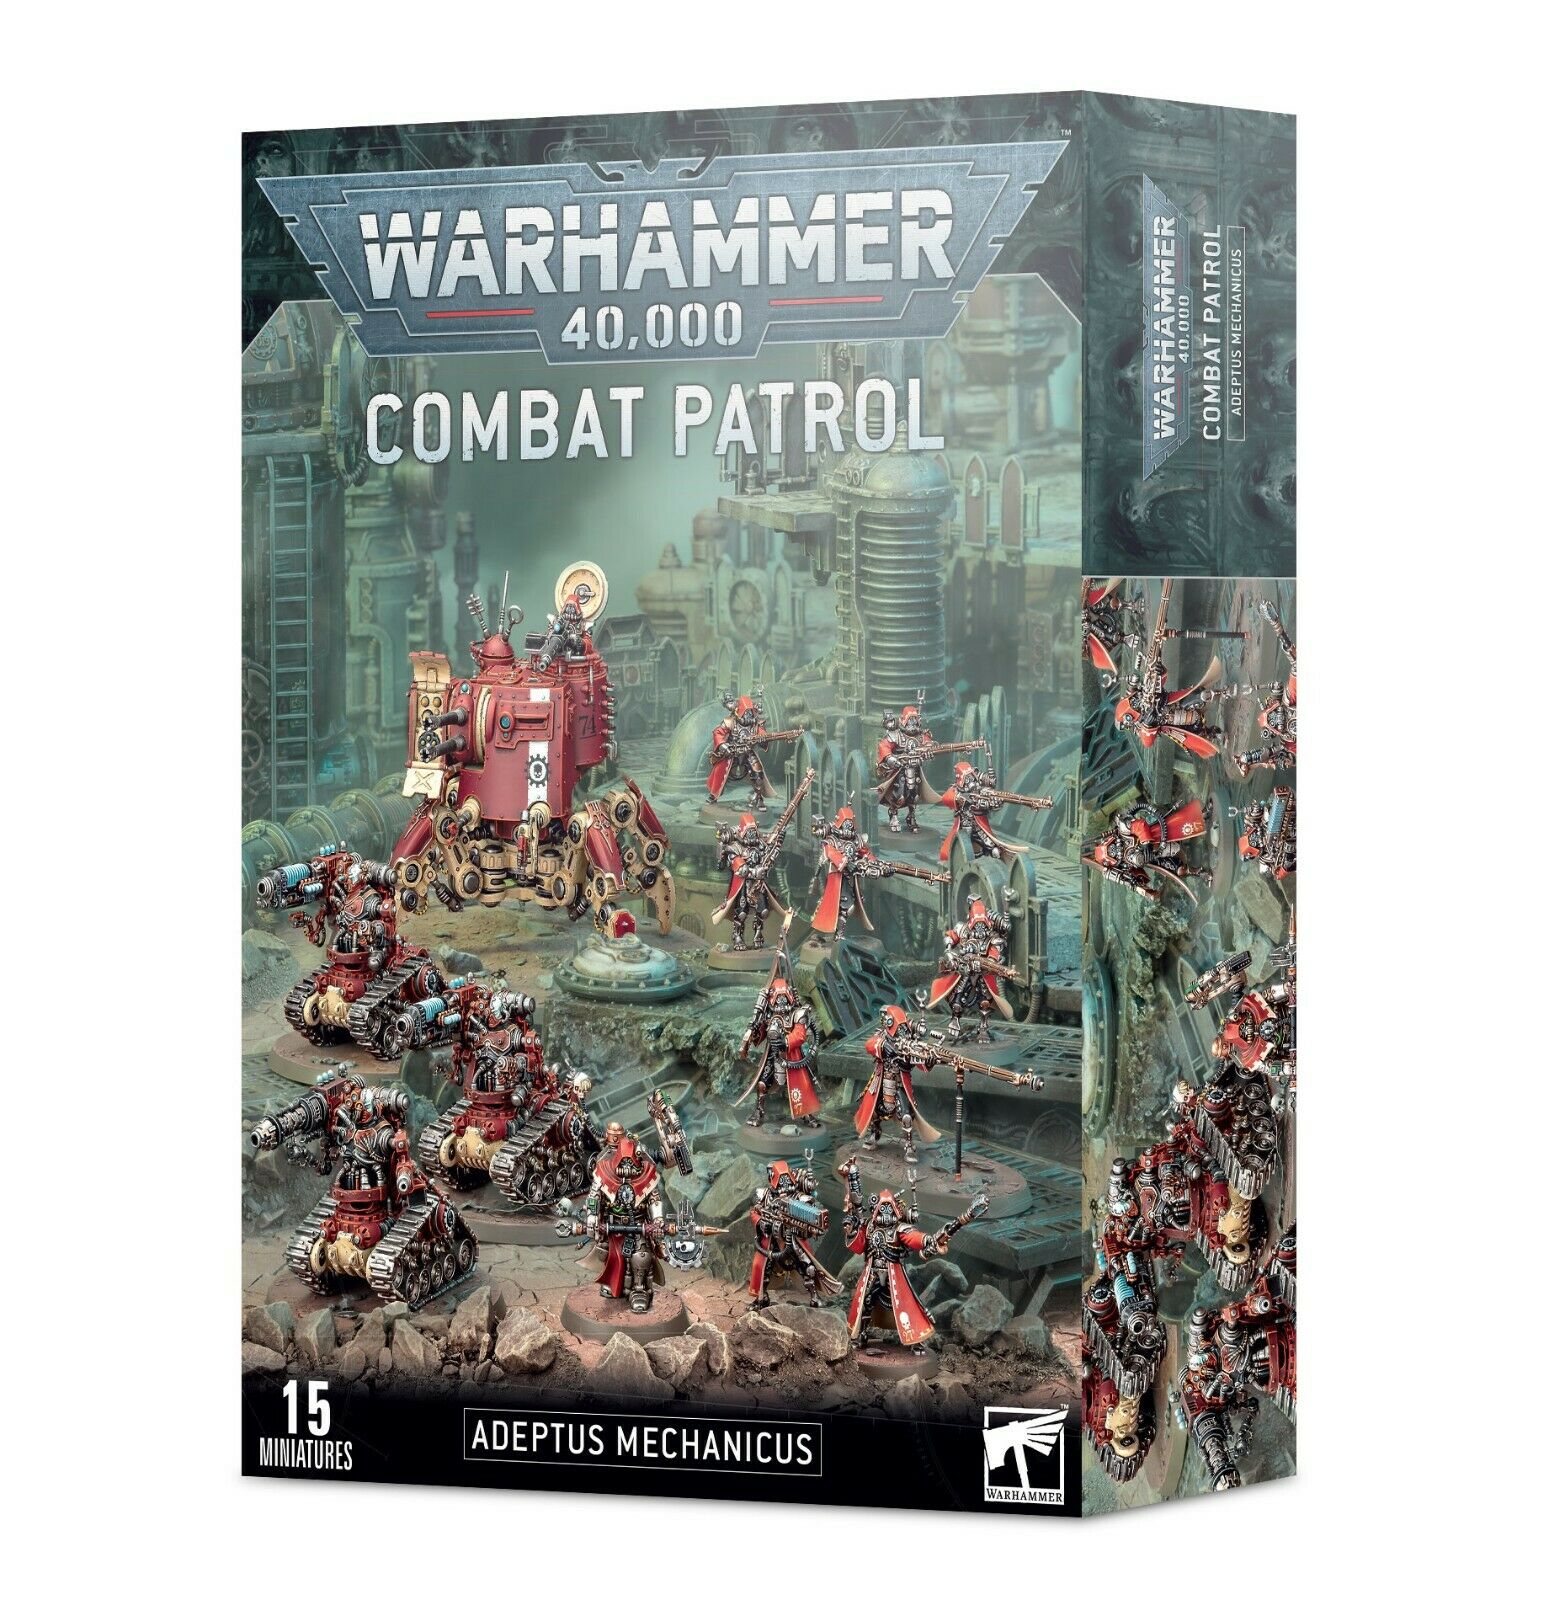 Combat Patrol: Adeptus Mechanicus General Games Workshop 